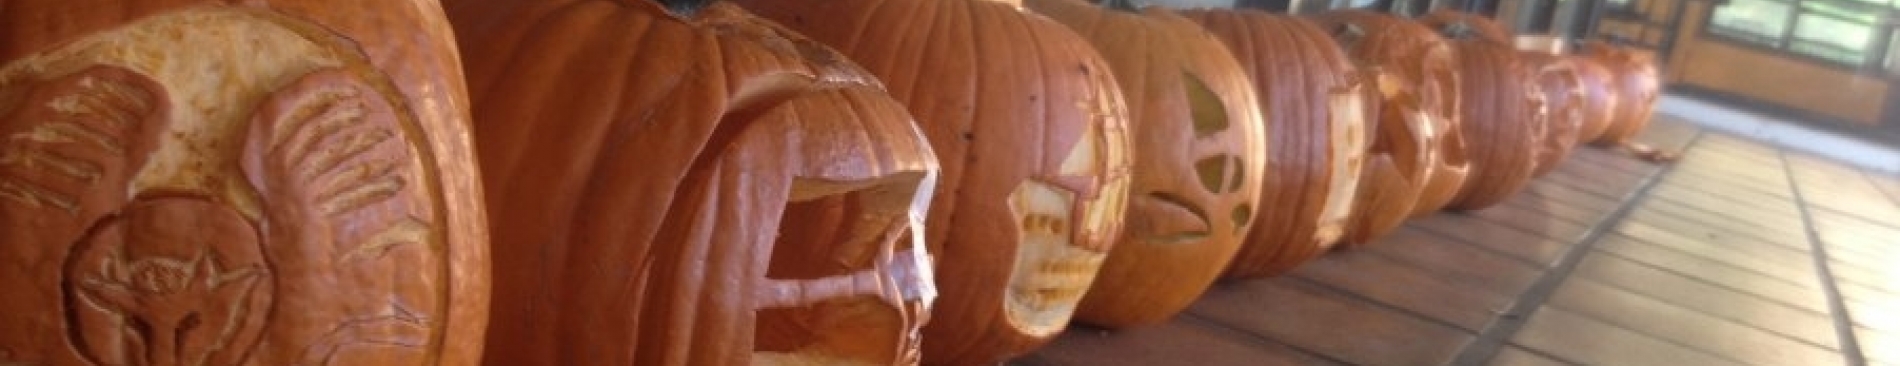 Slideshow: Carving Pumpkins